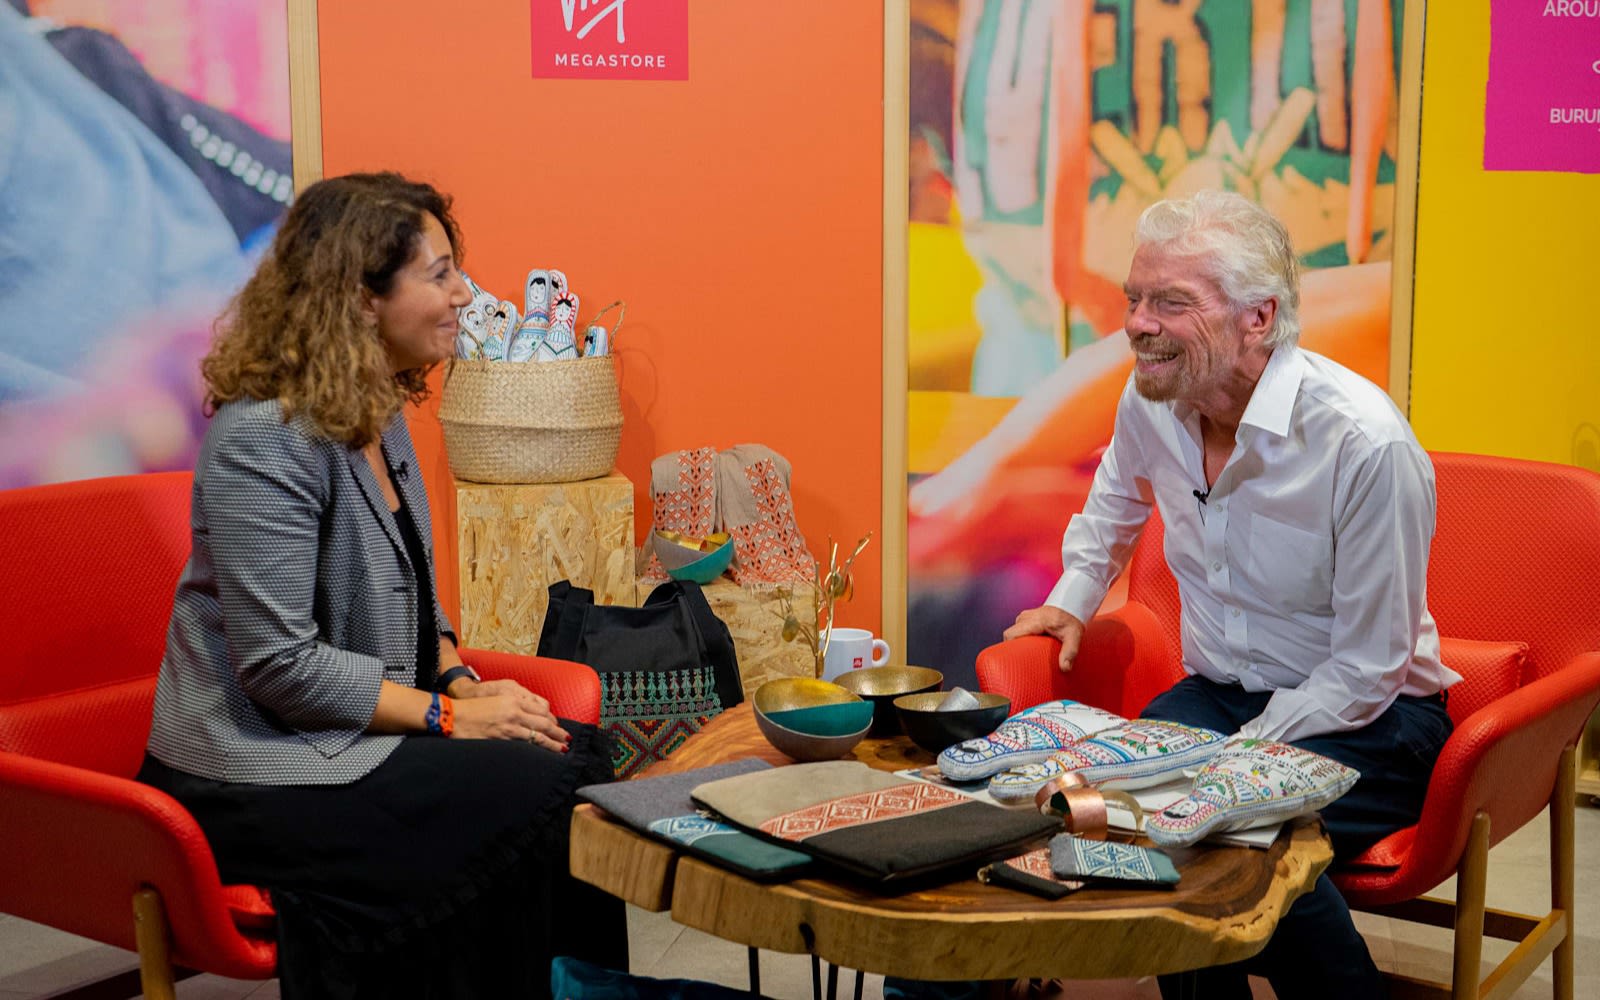 Richard Branson at Virgin Megastores Dubai